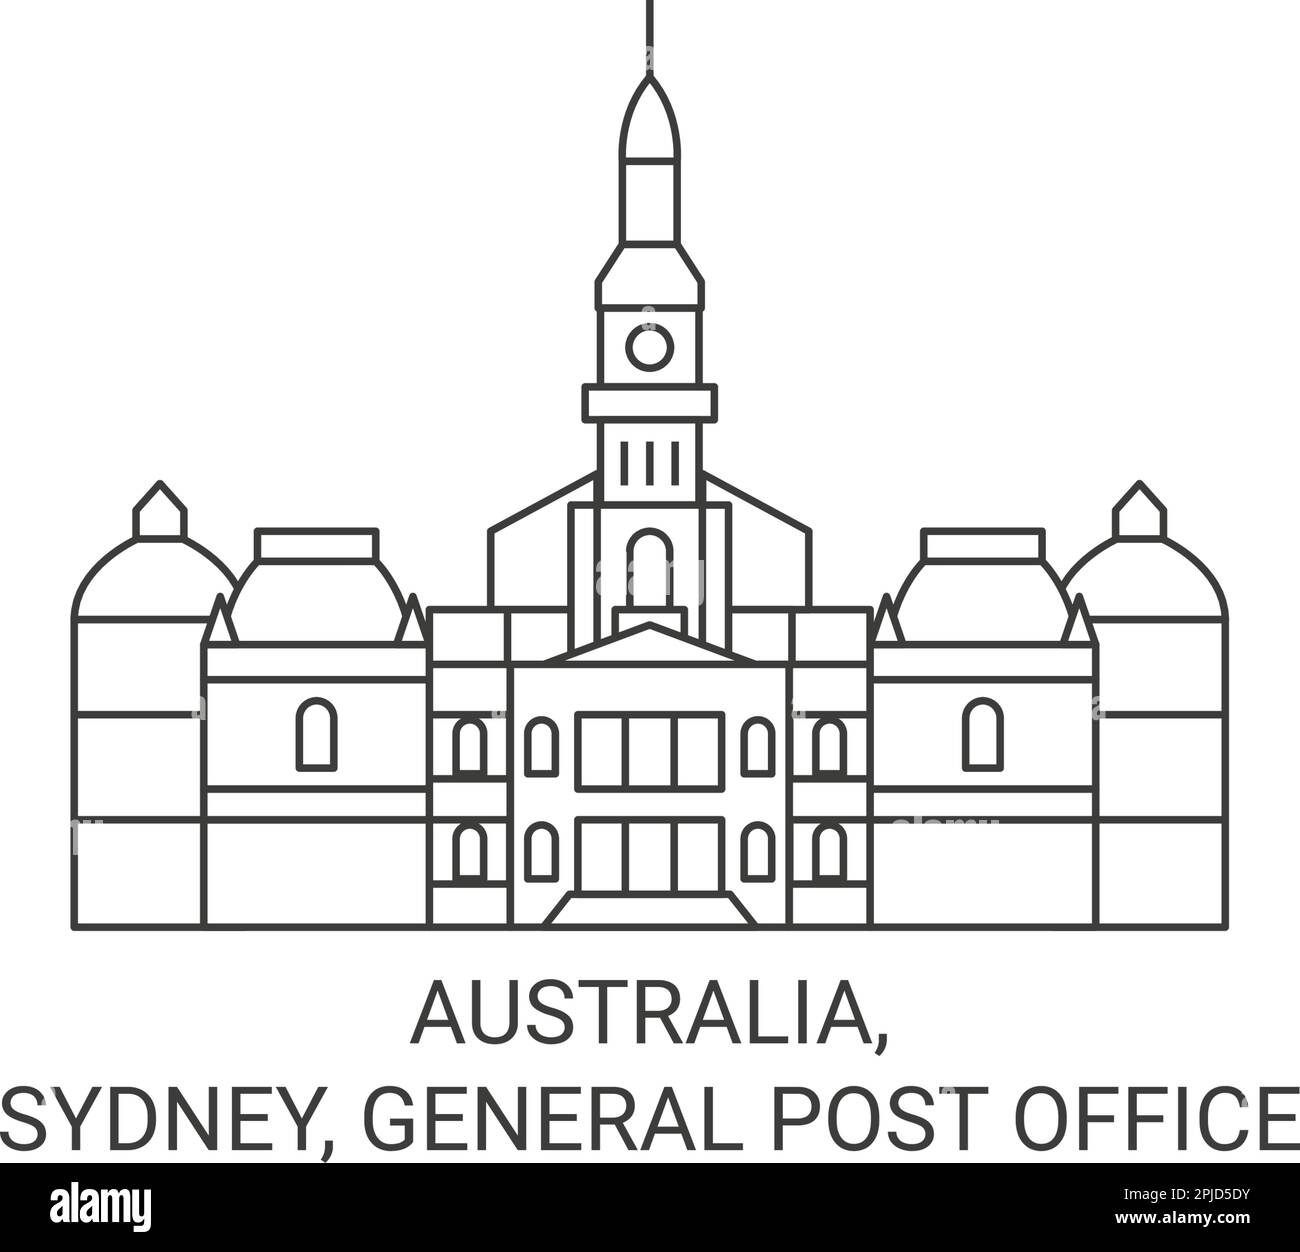 Australia, Sydney, General Post Office travel landmark vector illustration Stock Vector